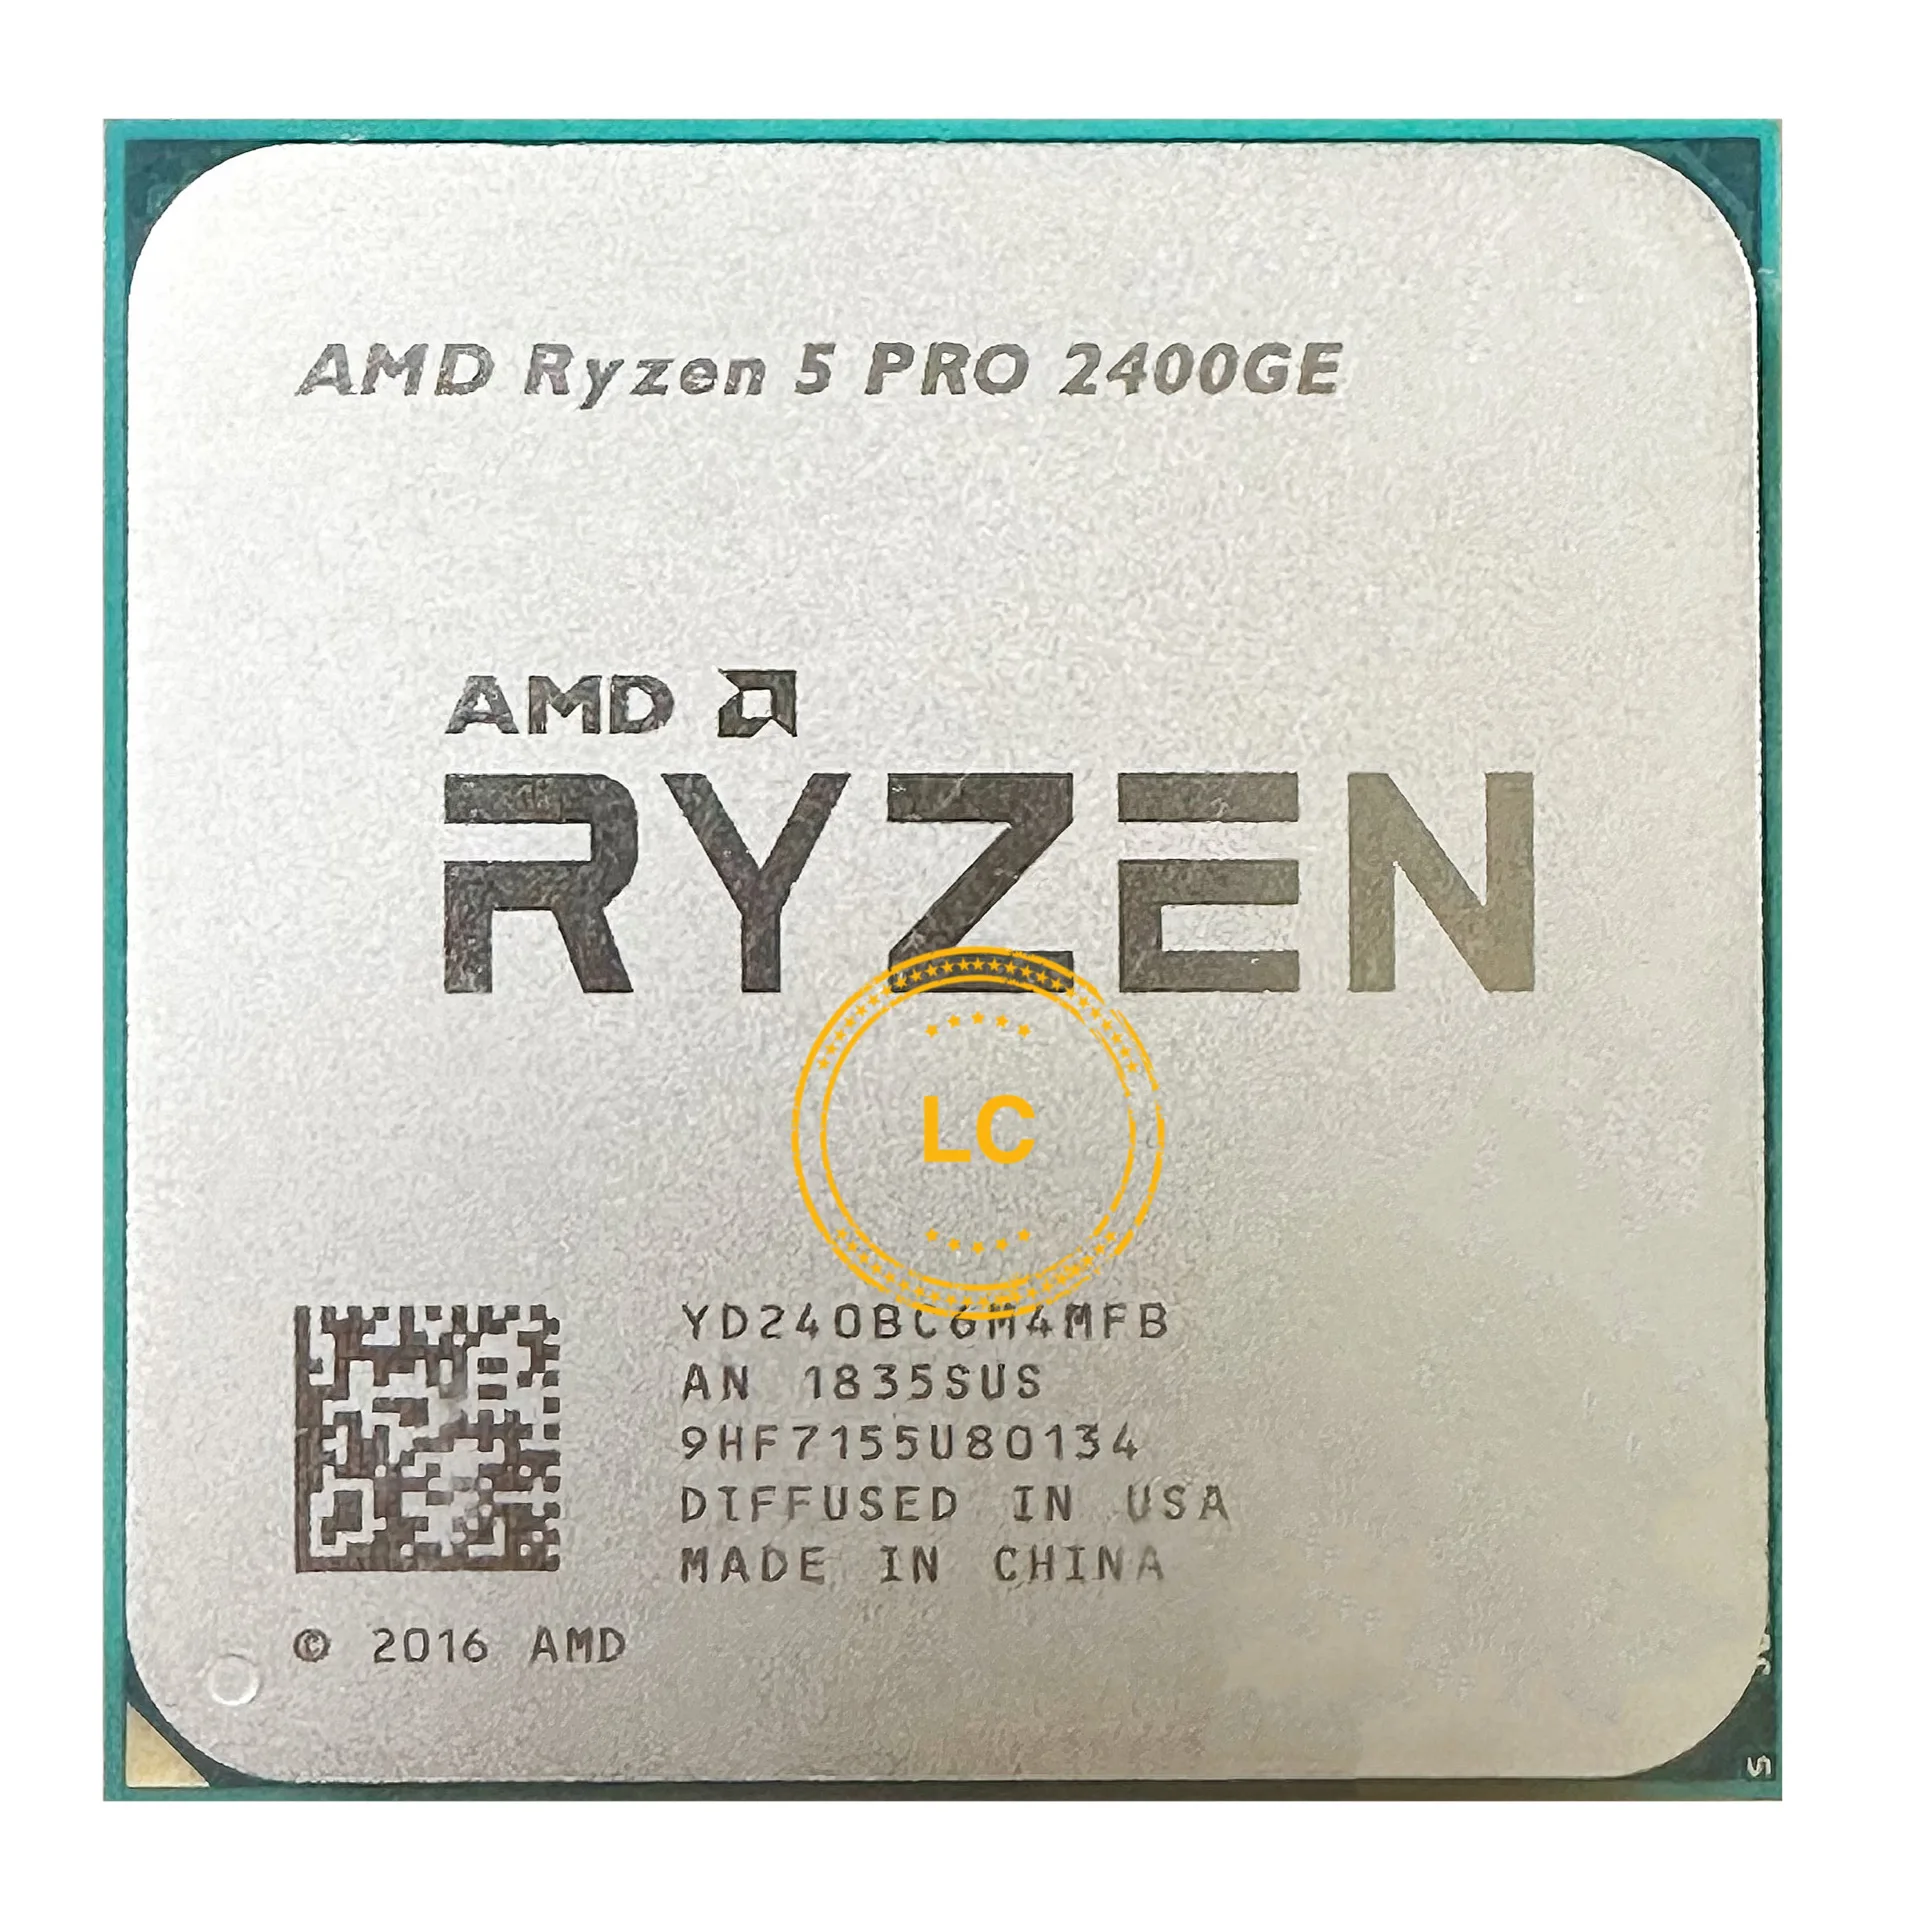 Ryzen 3 pro 4350g. Процессор AMD Ryzen 3 Pro 4350g OEM. AMD Ryzen 3 Pro 4350g наклейка. Процессор AMD Ryzen 3 4350g Pro OEM 100-000000148. AMD Ryzen 3 Pro 4350g am4, 4 x 3800 МГЦ.